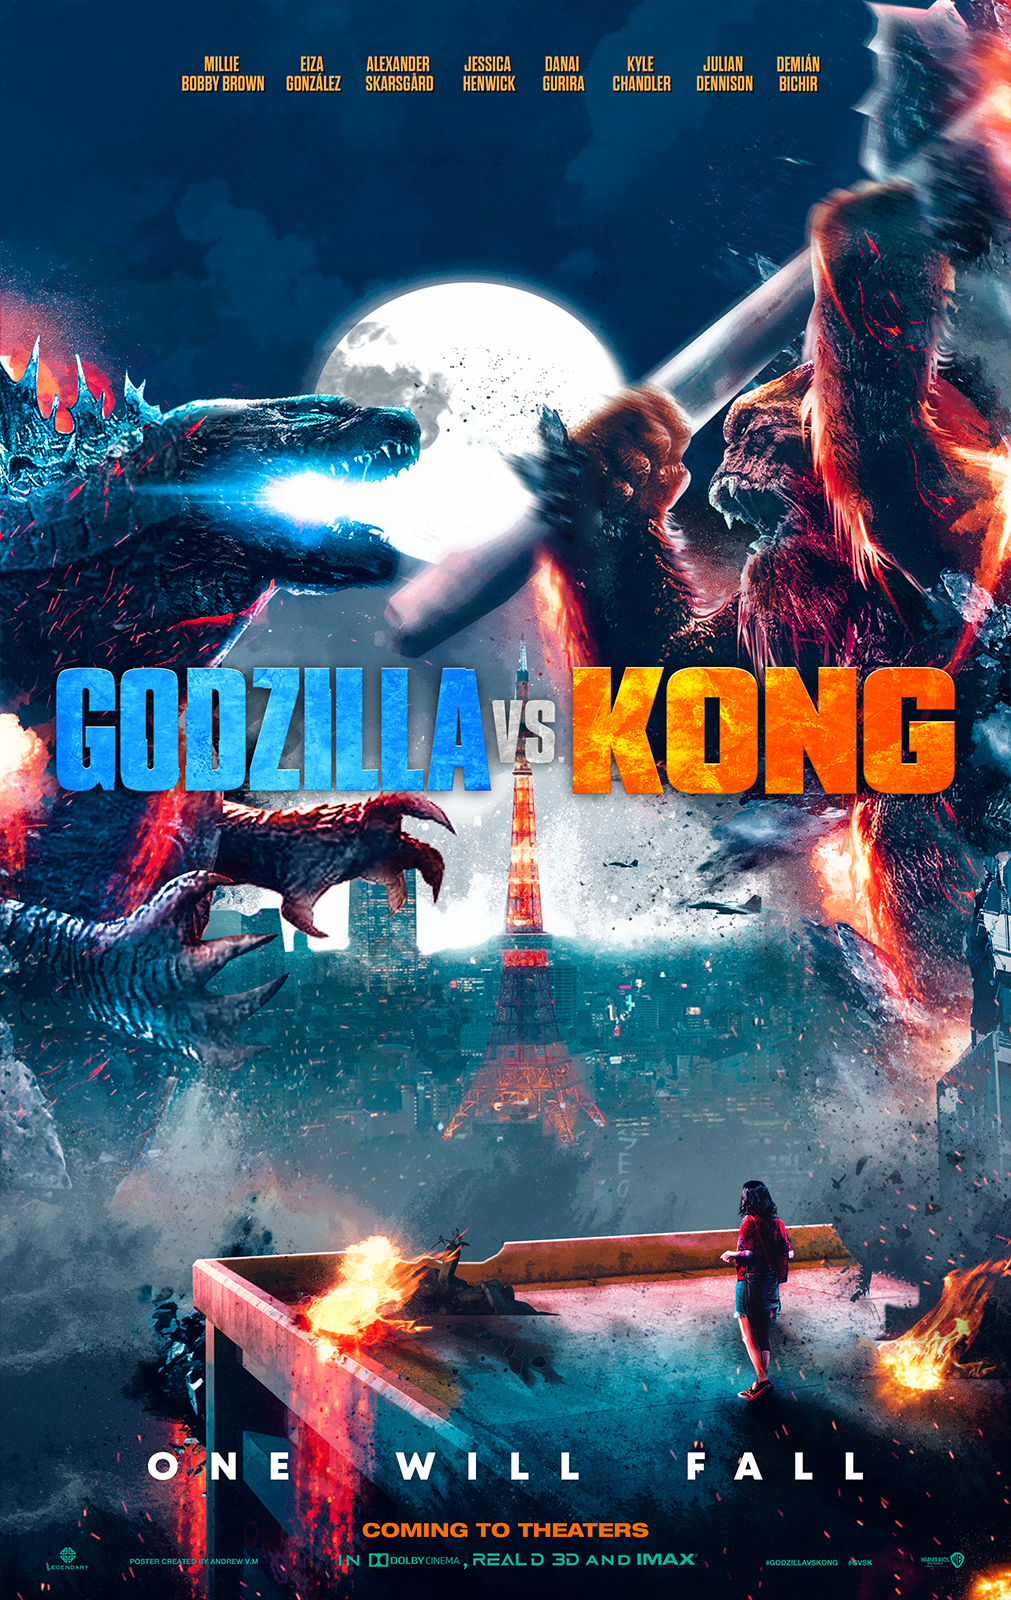 GODZILLA VS KONG Poster HD 2020 "fight" (By Andrew V.M)